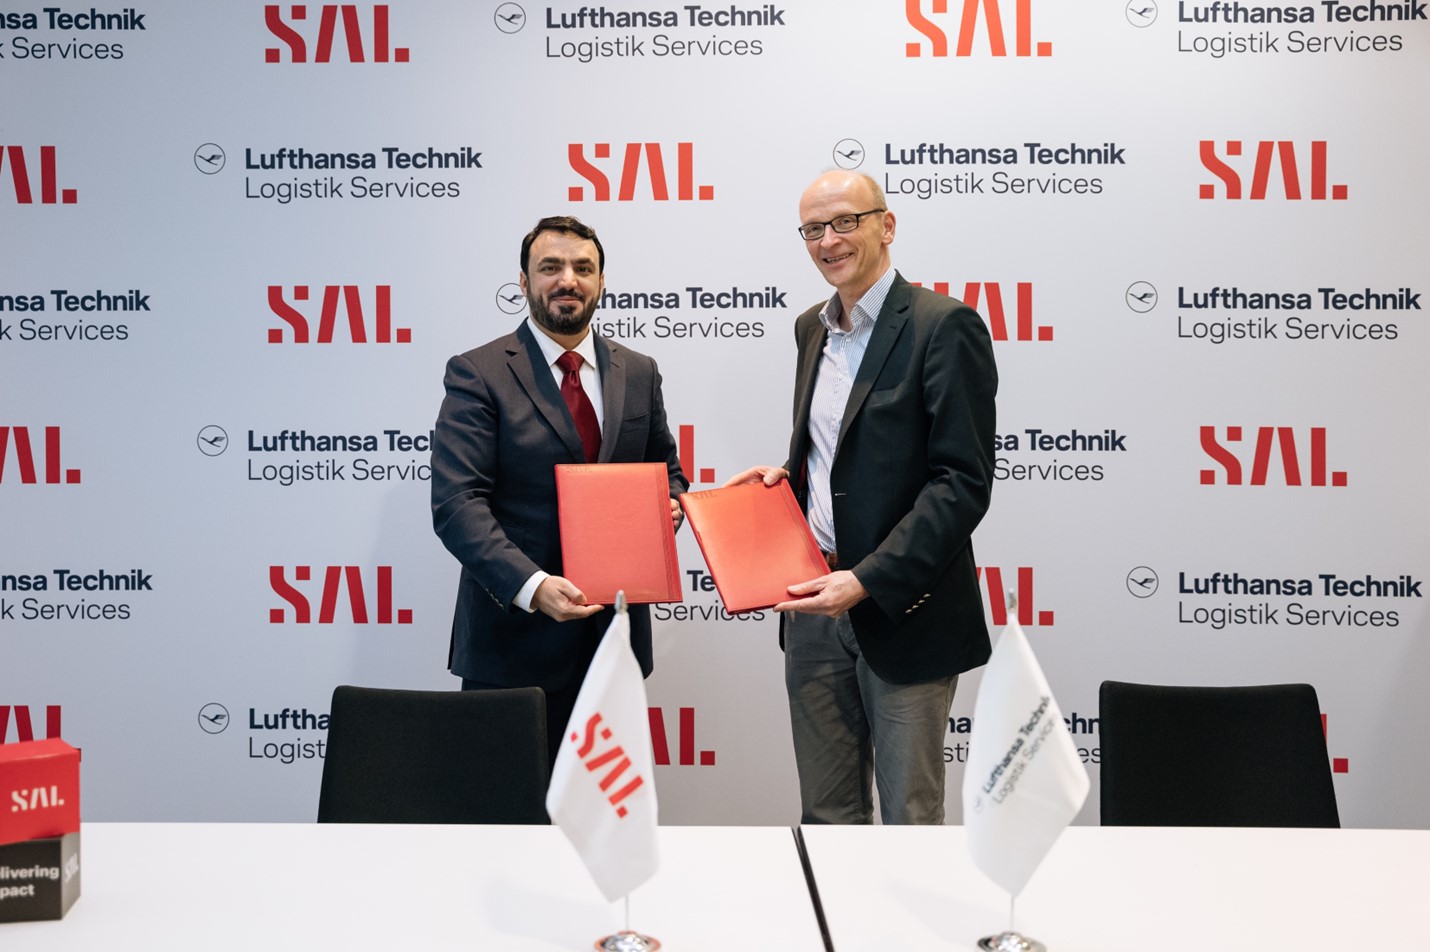 SAL Saudi Logistics Services & Lufthansa Technik Logistik Services Sign Strategic MoU to Support Logistics Activities in Saudi Arabia